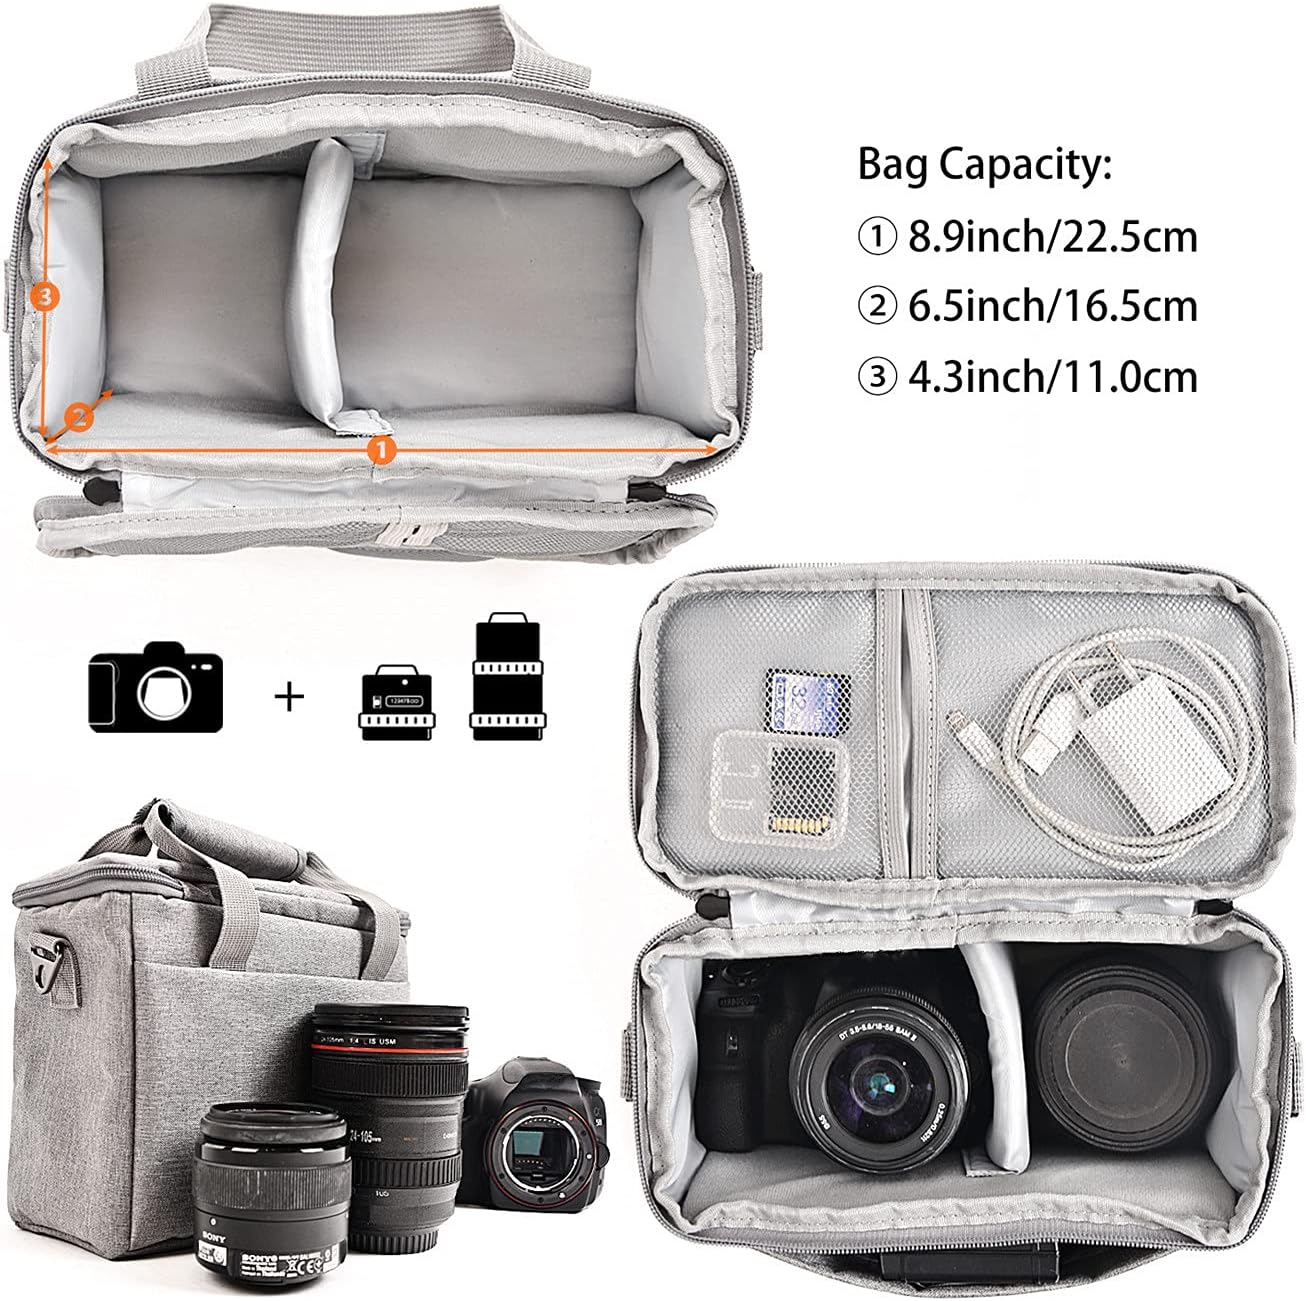 FOSOTO Camera Bag Case with Waterproof Rain Cover Compatible for Nikon D3500 D5600 D7500 D610 Canon EOS 4000D 2000D SL3 T7 M50 M6 SX530 Fujifilm X-T20,Grey